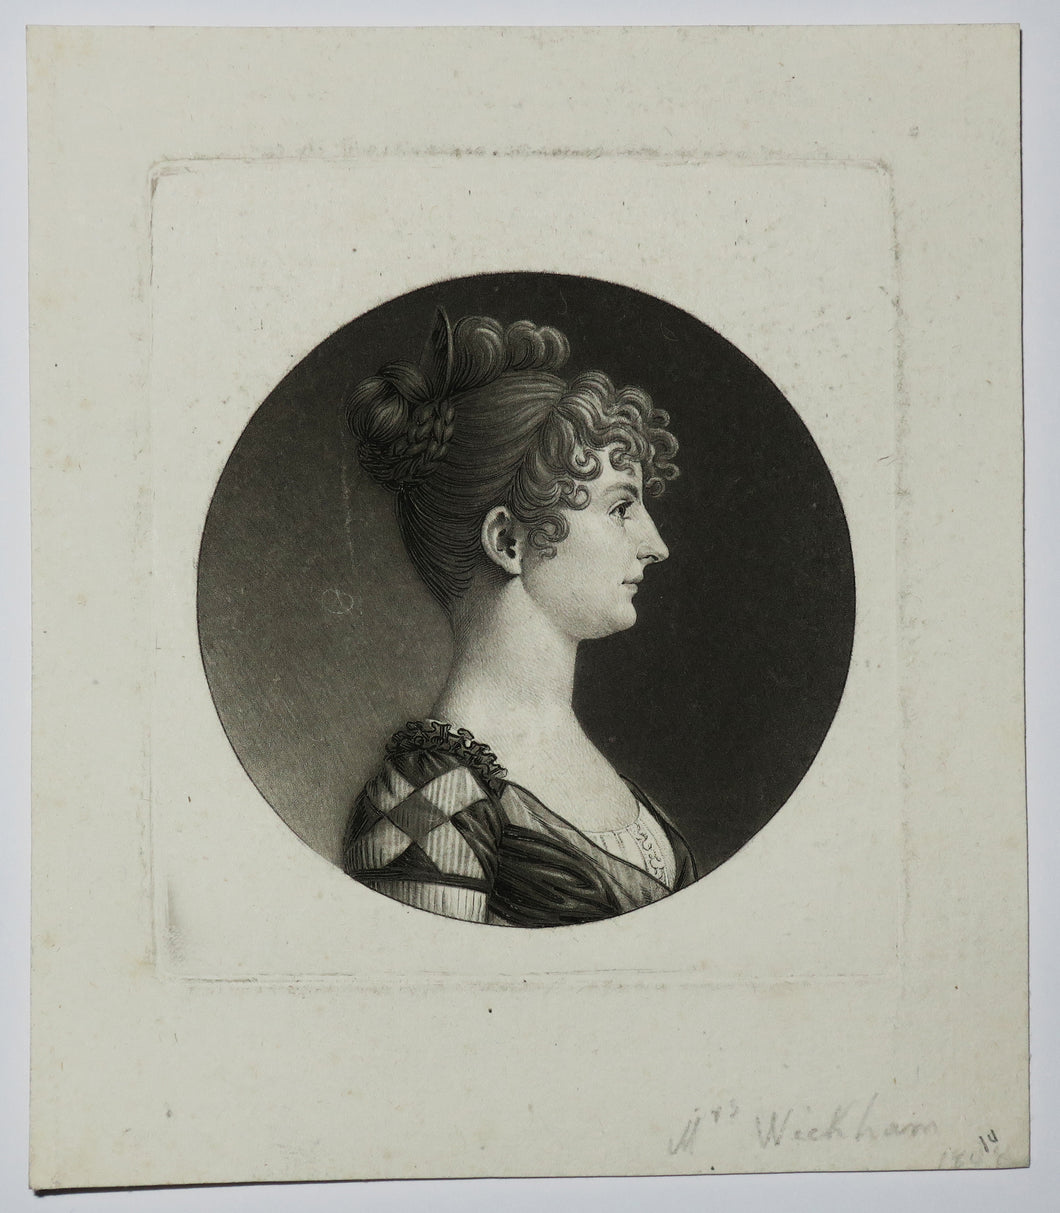 Portrait d’Elizabeth Selden McClurg WICKHAM (Virginia 1781 - 1853).